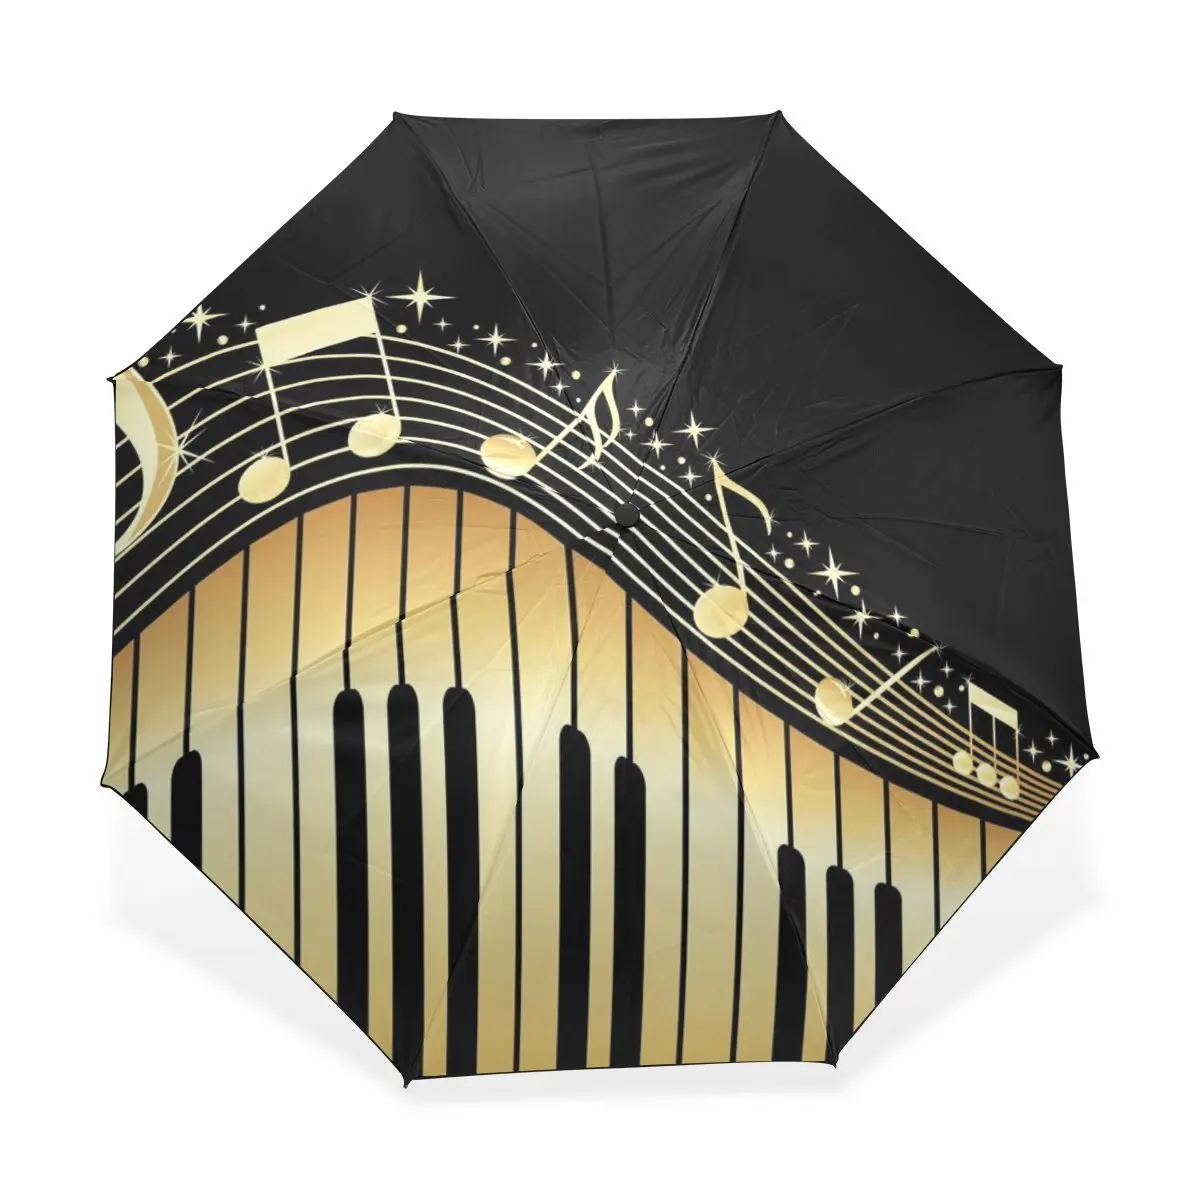 Cheap Overstock Umbrellas, find Overstock Umbrellas deals on line at